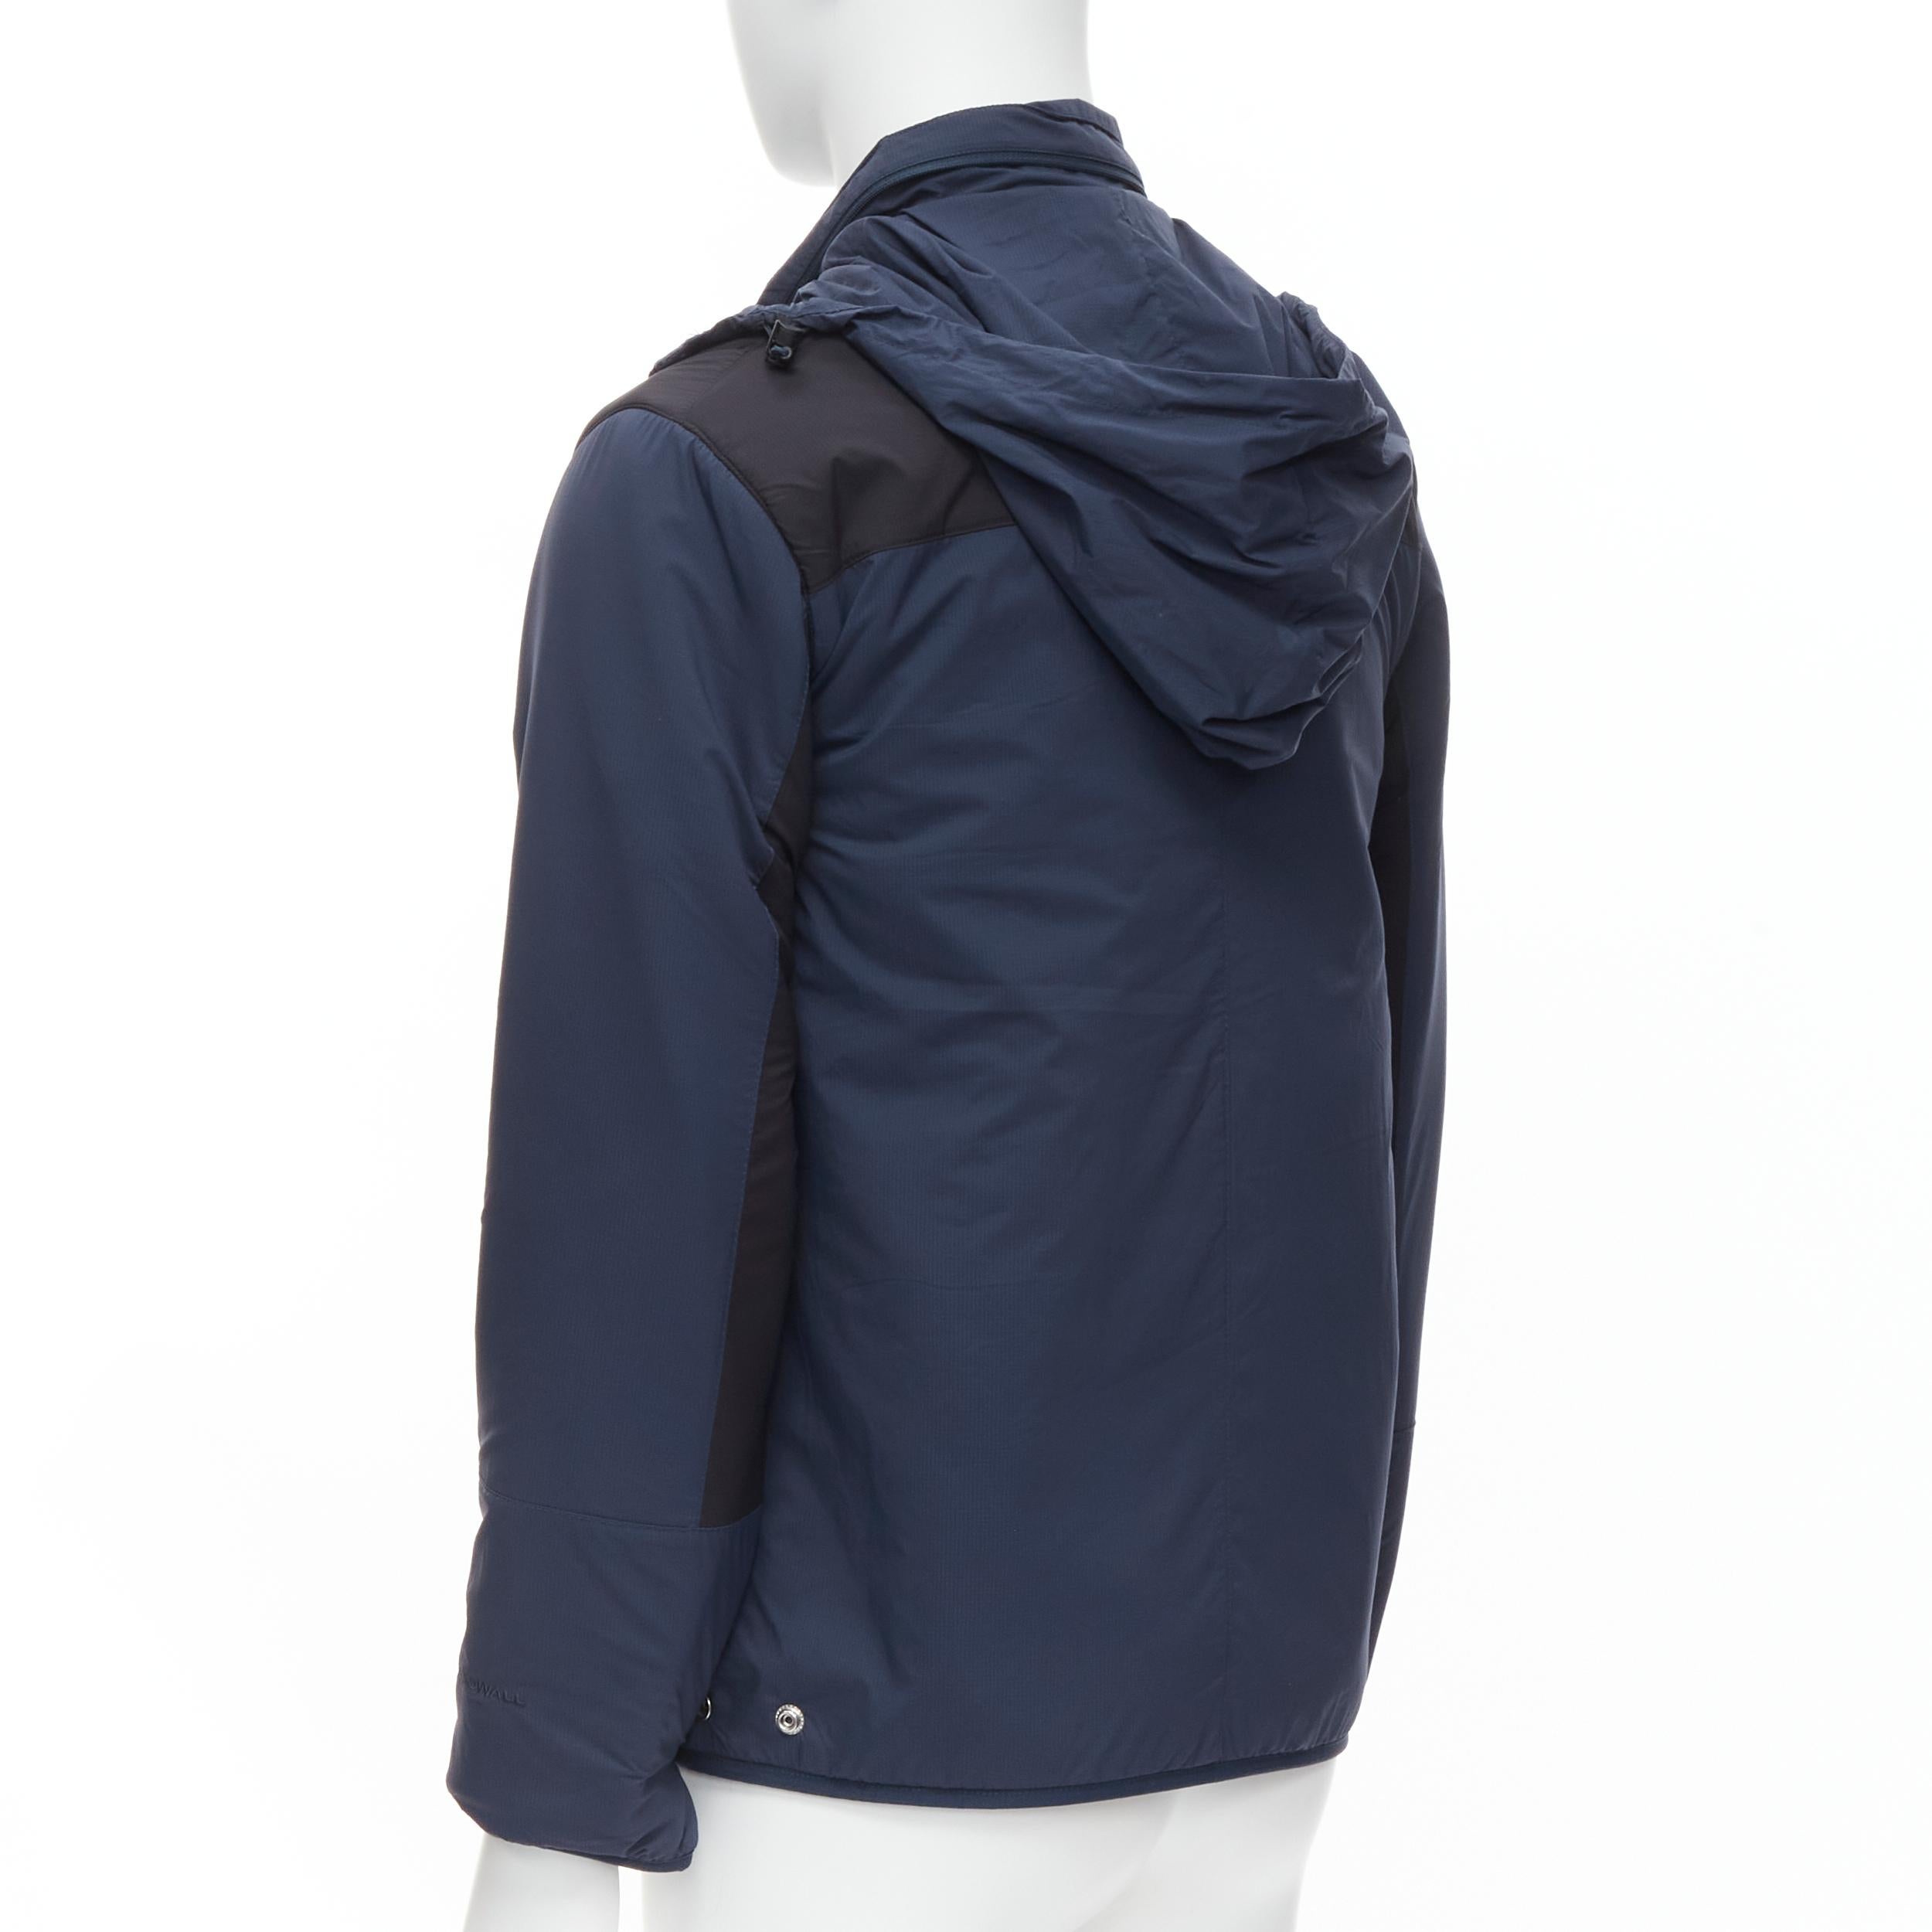 new THE NORTH FACE KK Fleece Work Urban Explore Polartec fleece jacket XS S In New Condition For Sale In Hong Kong, NT